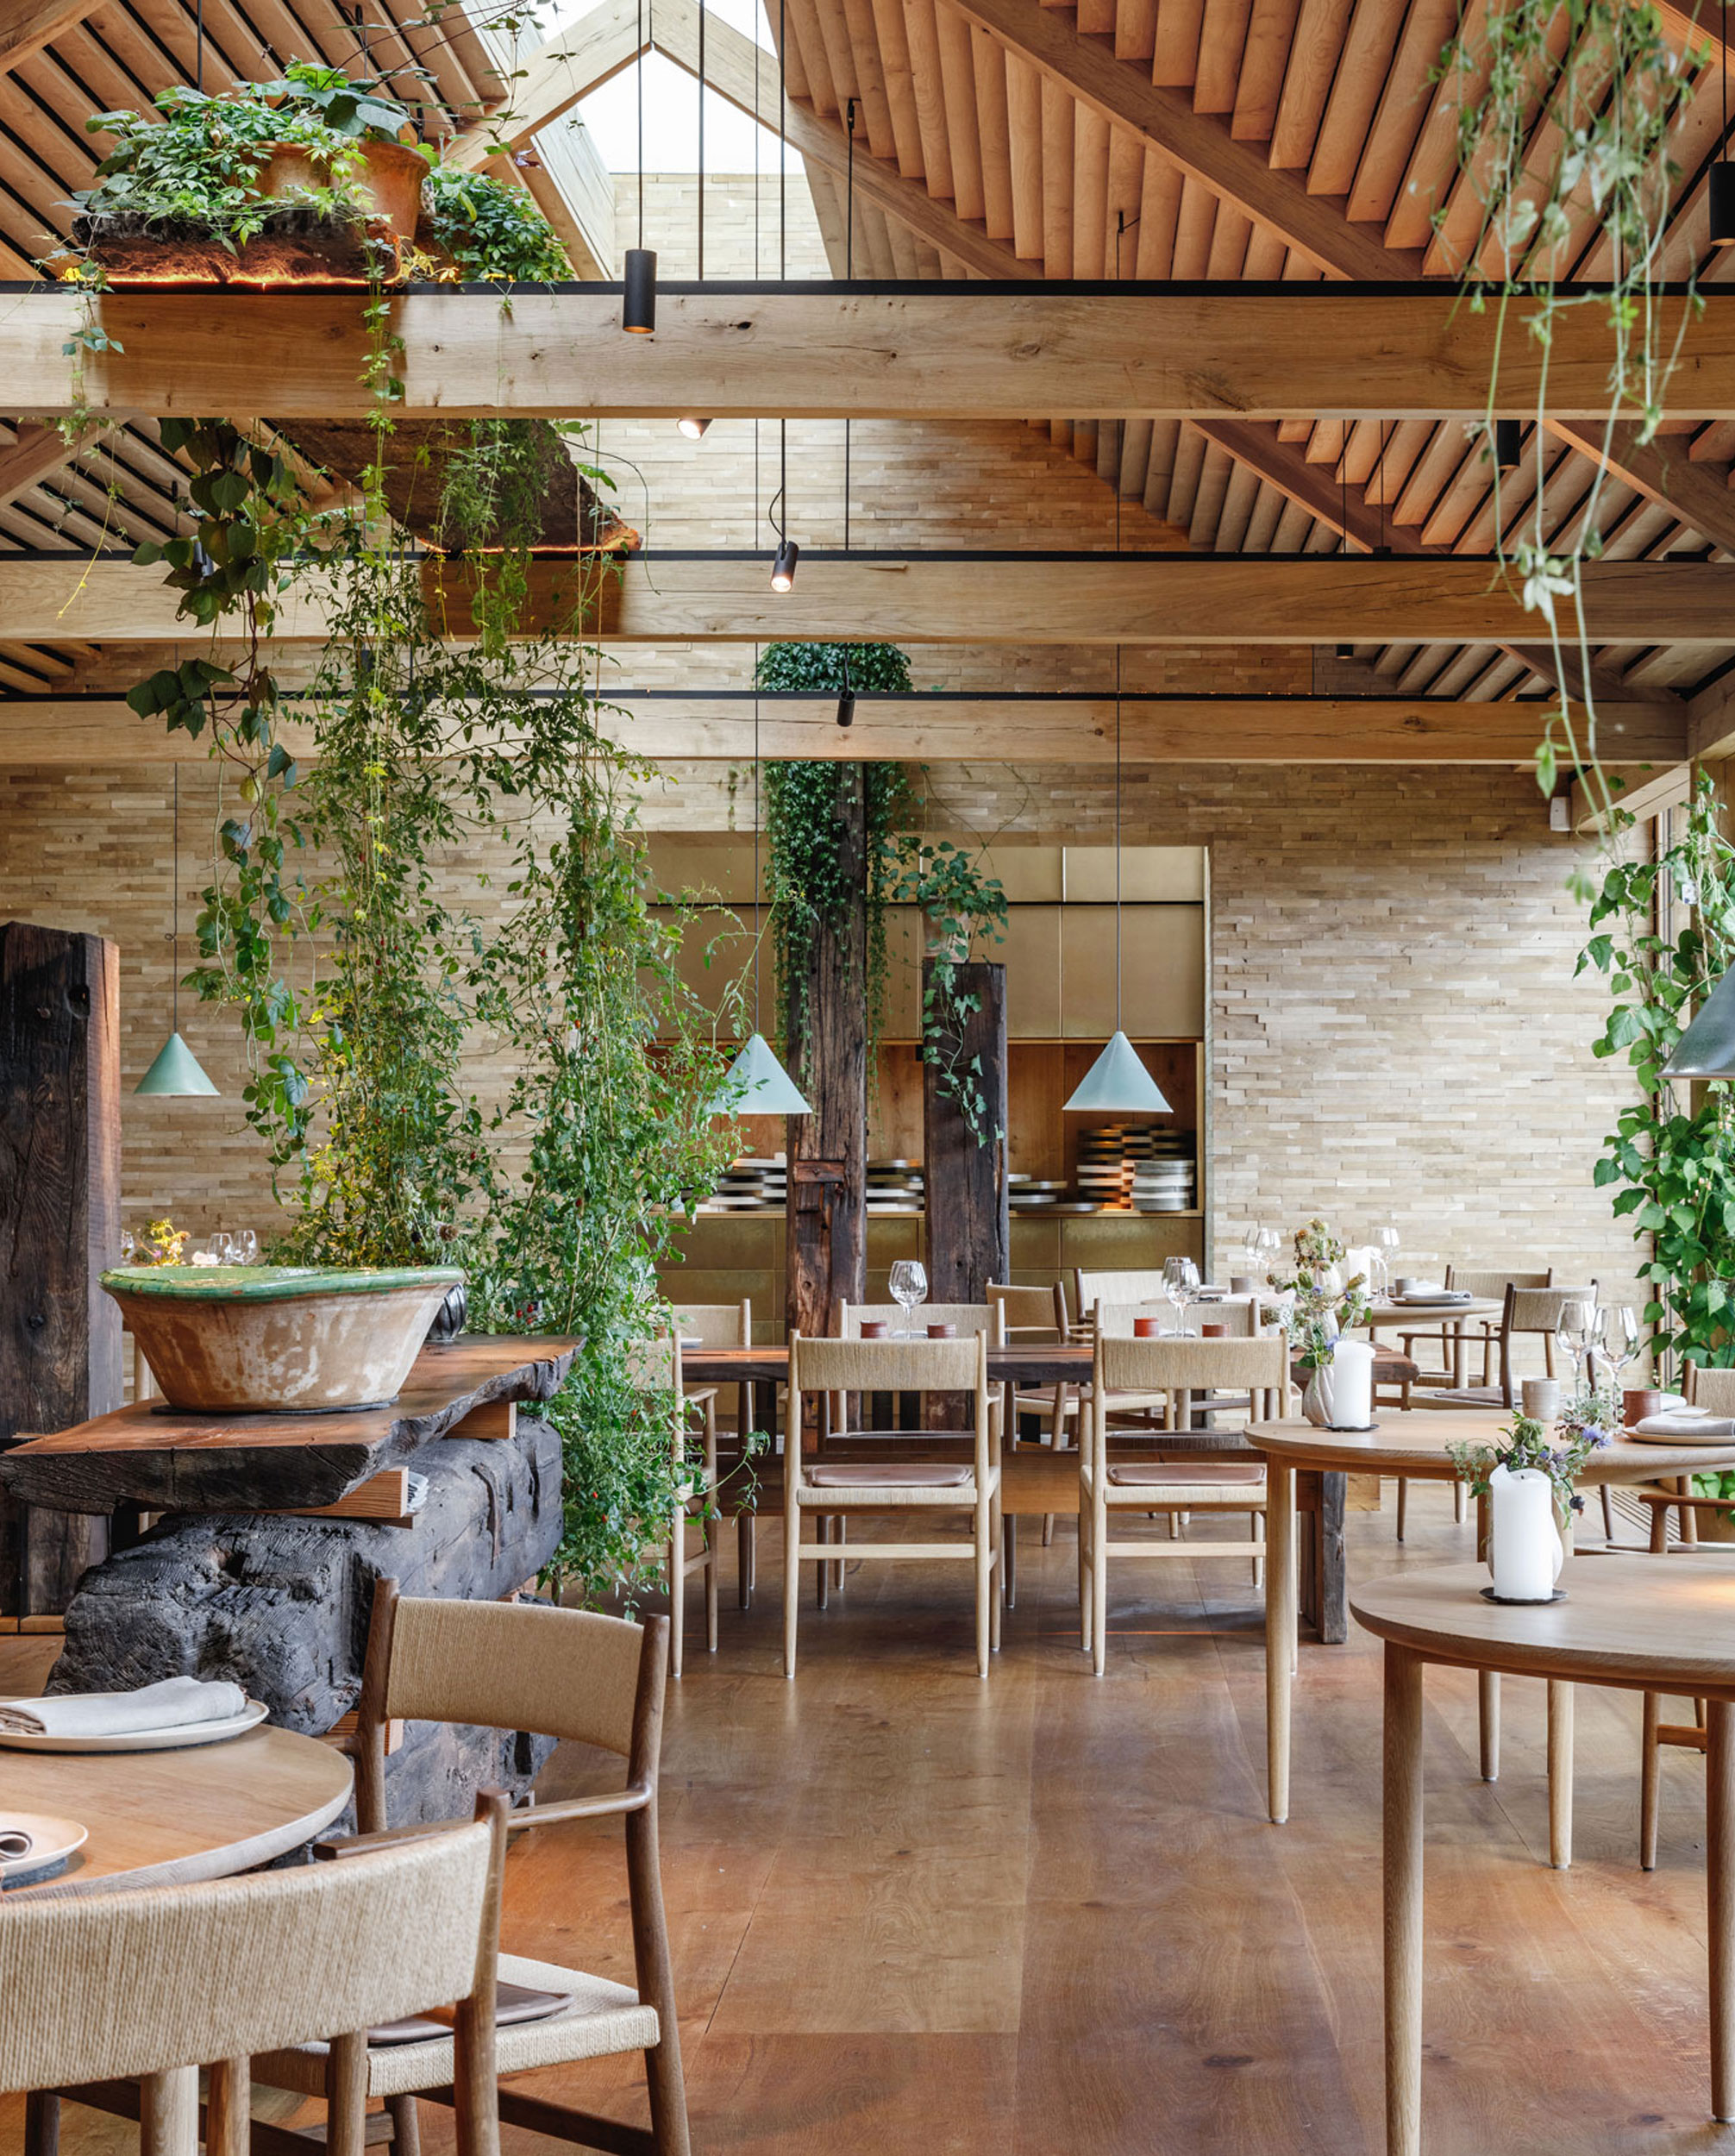 Noma Restaurant in Copenhagen BIG Bjarke Ingels Group | Arquitectura Viva